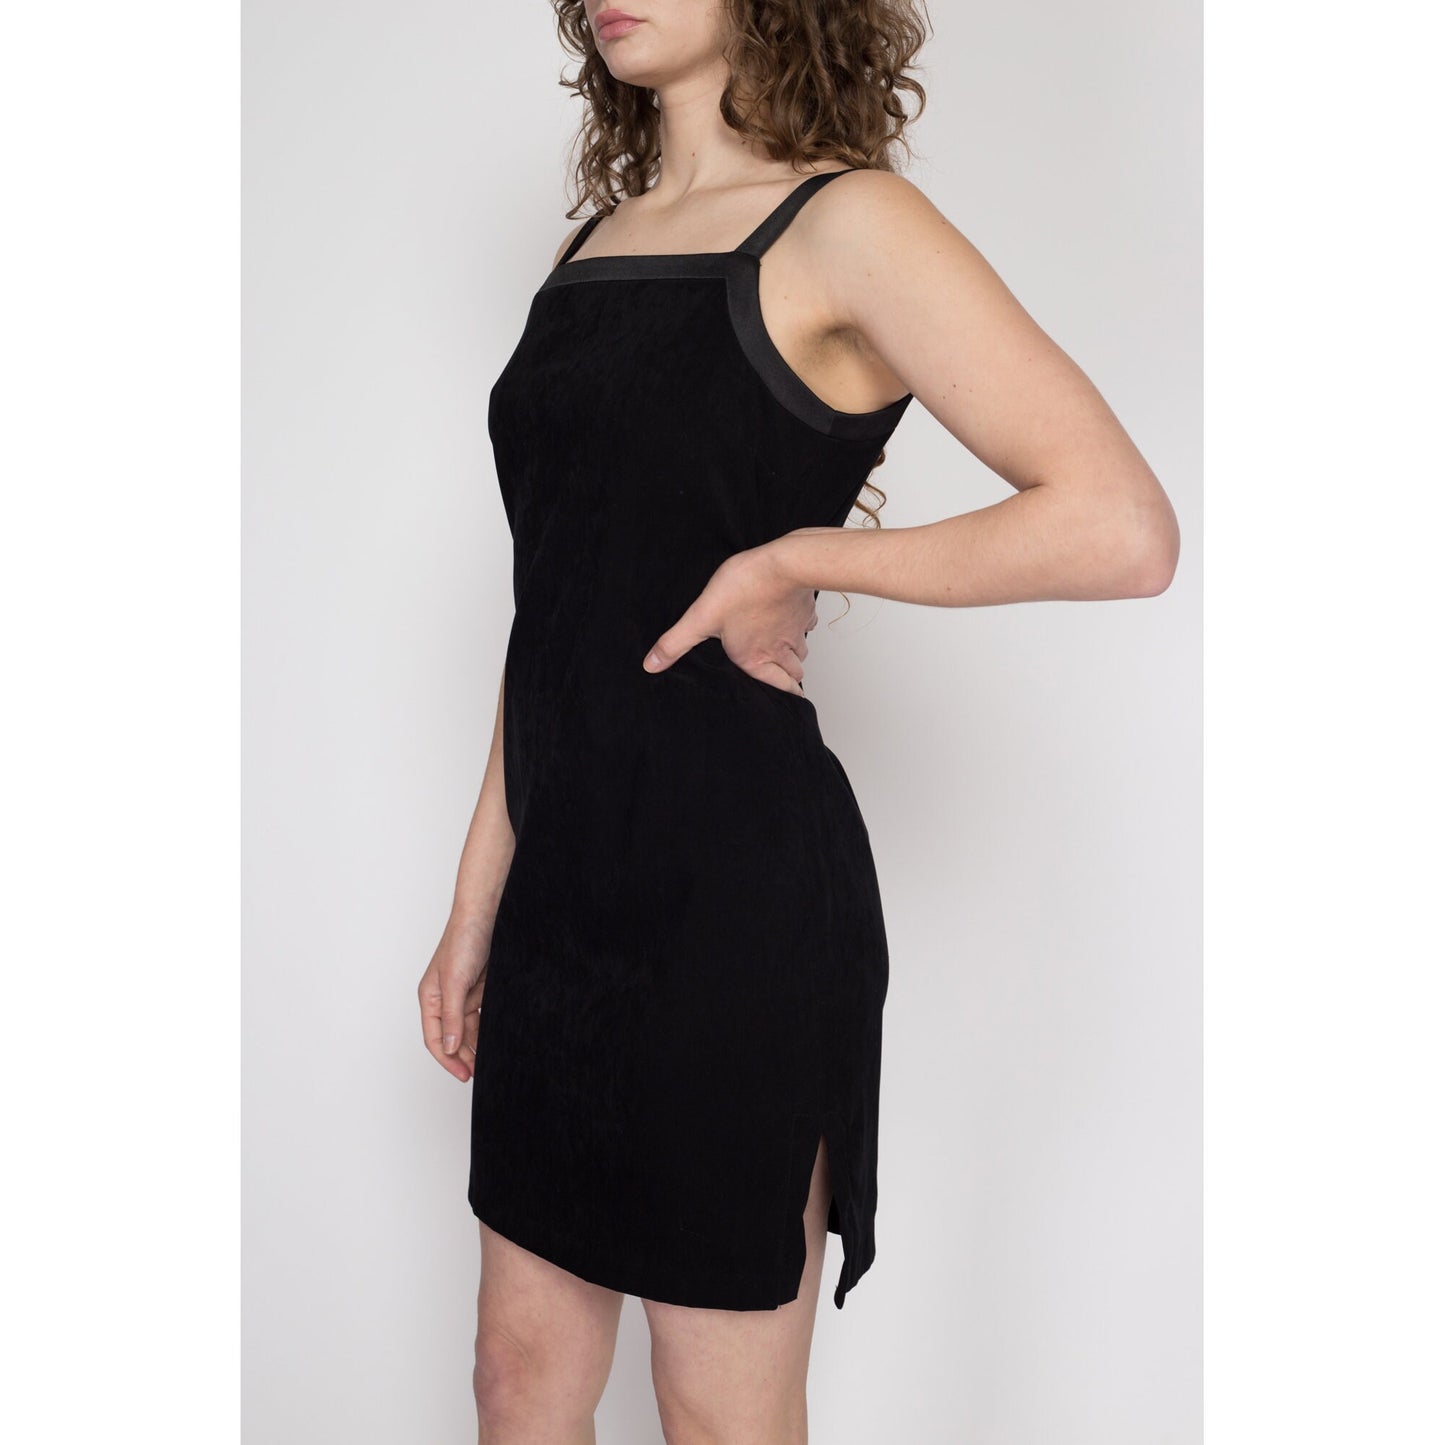 Medium 90s Black Ultrasuede Low Back Mini Cocktail Dress | Vintage Sleeveless Square Neck A Line Party Dress